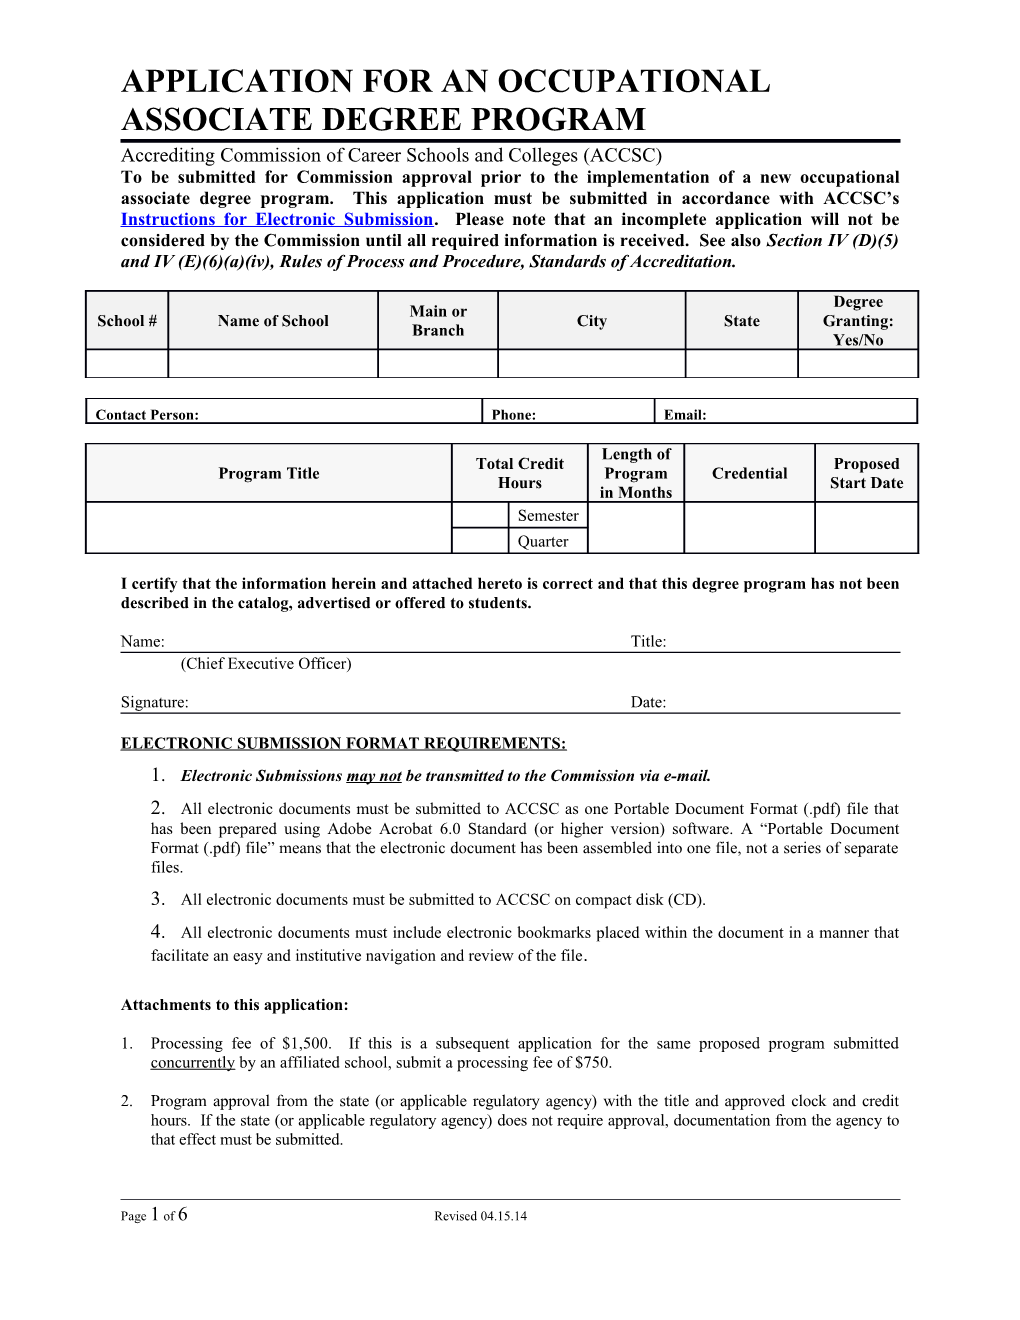 Application for an Occupational Associate Degree Program